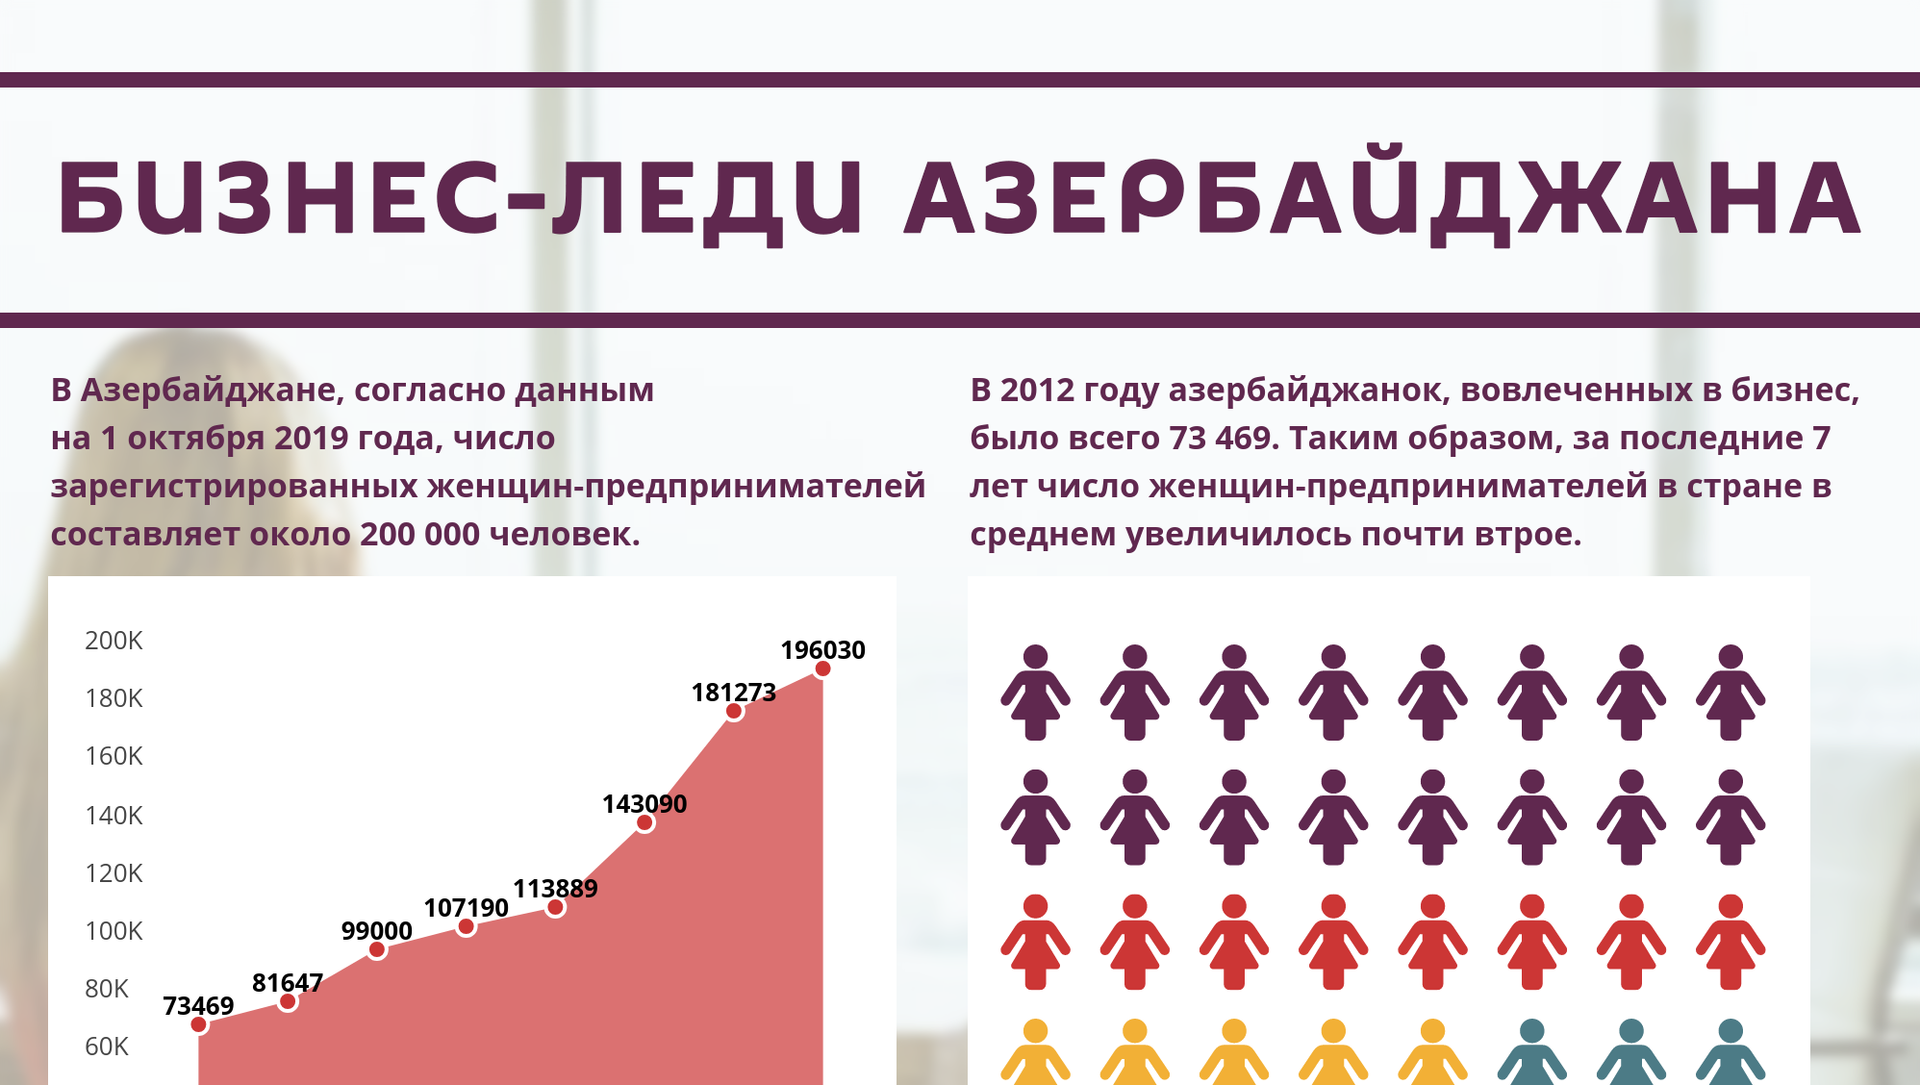 В каком городе больше мужчин. Кого больше мужчин или женщин. Biznes Lady Azerbaijan. Кого больше в Азербайджане мужчин или женщин. Статистика изменяющих мужчин и женщин в Азербайджане.